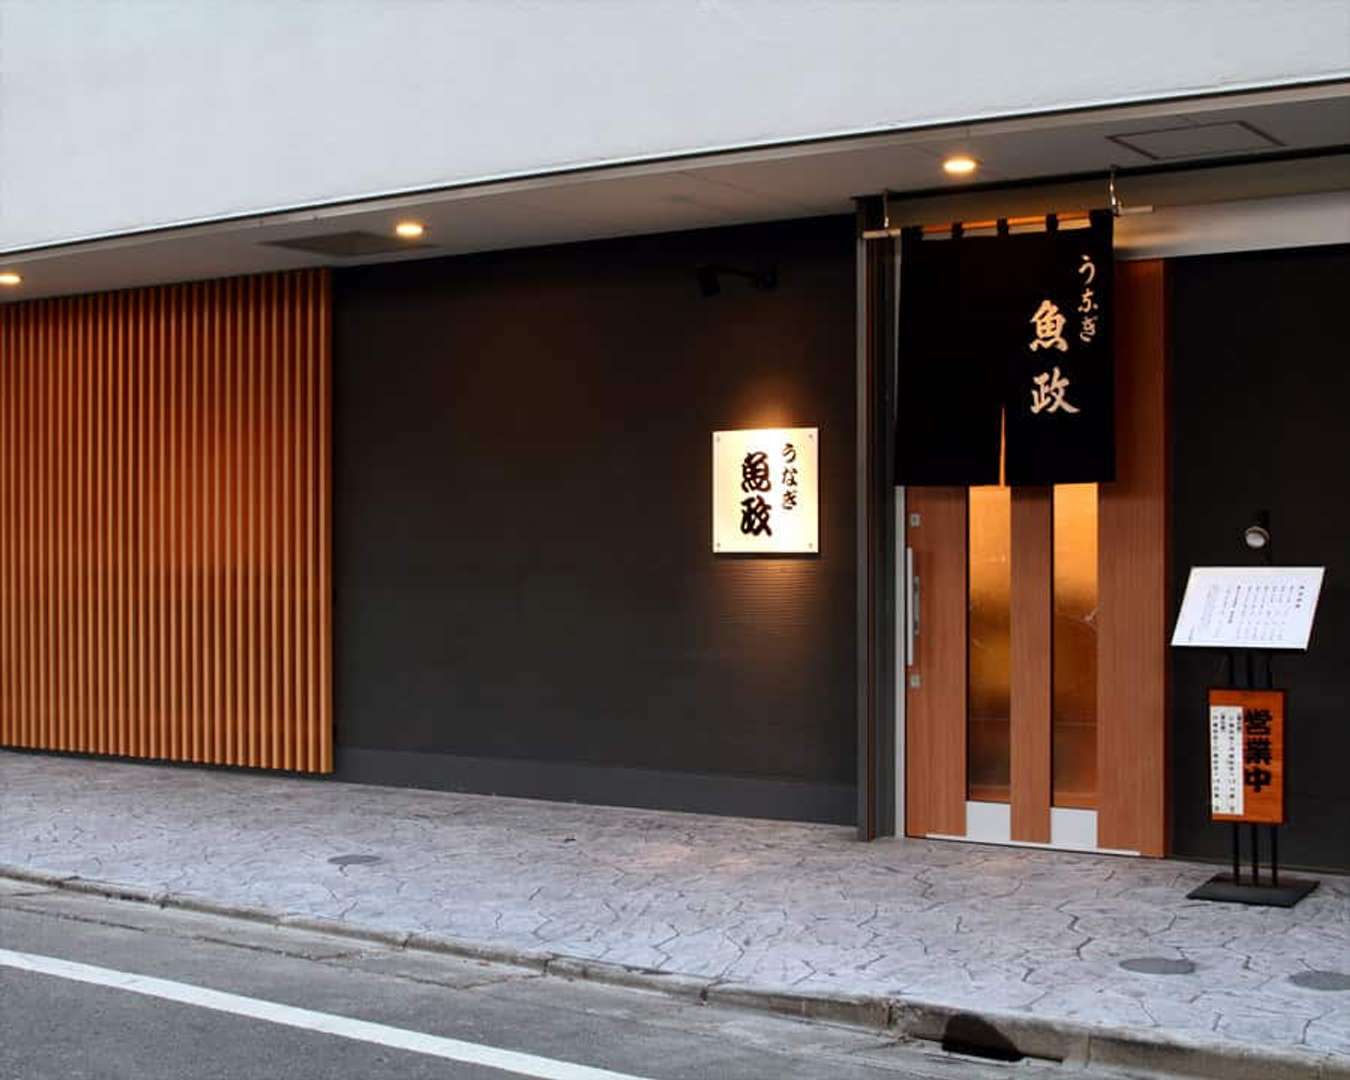 Unagi Uomasa Restaurant - nhà hàng nổi tiếng ở Tokyo